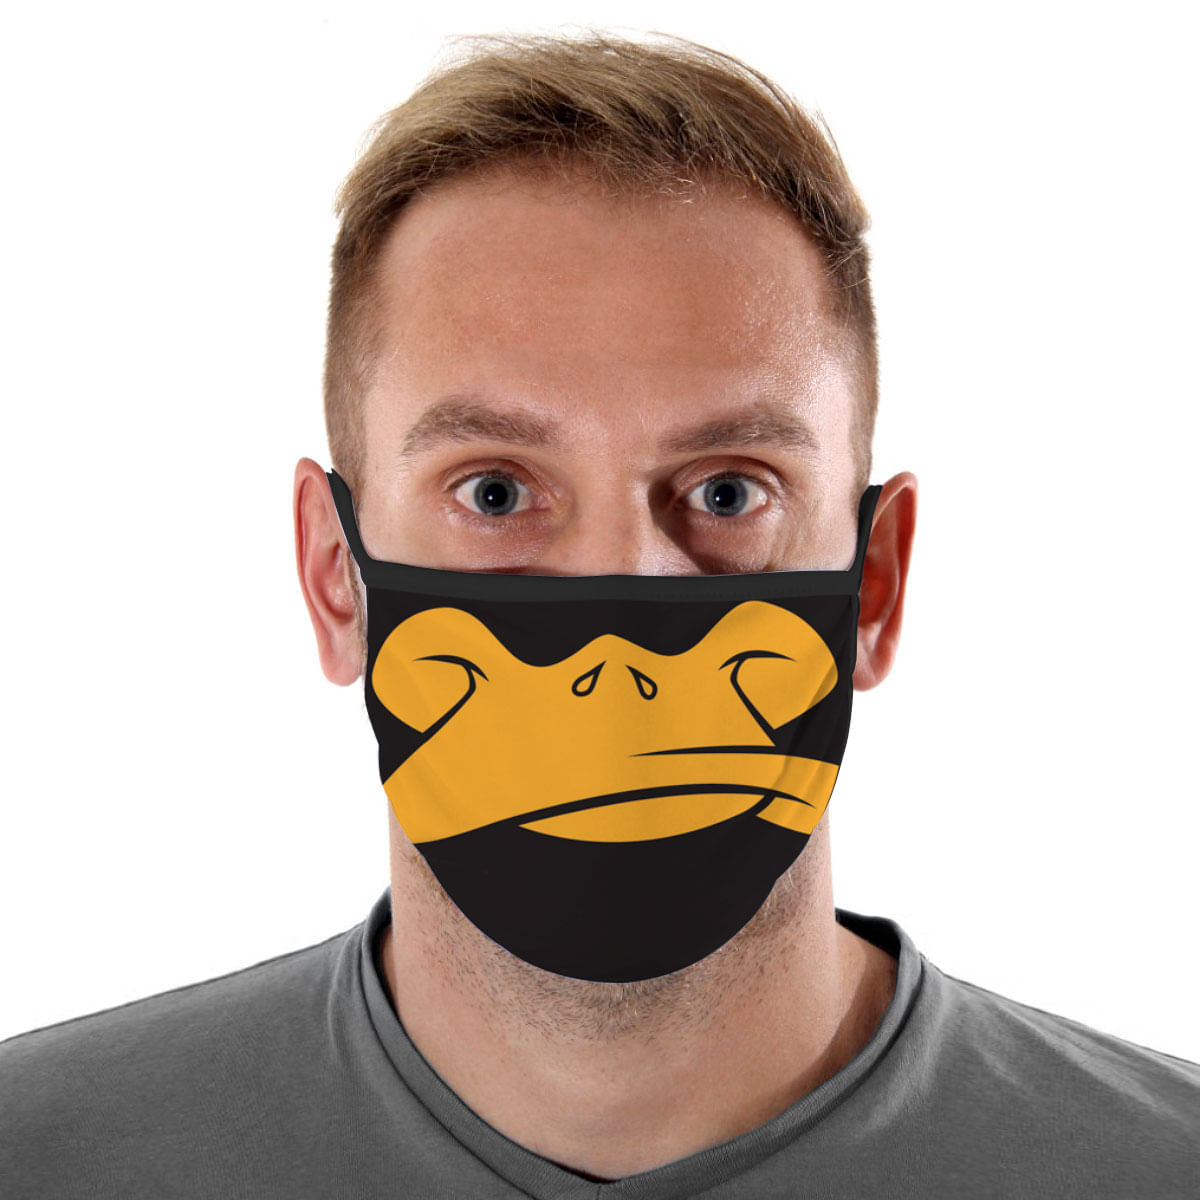 Máscara de Proteção Adulto - Patolino - Mask4all U / UNICA